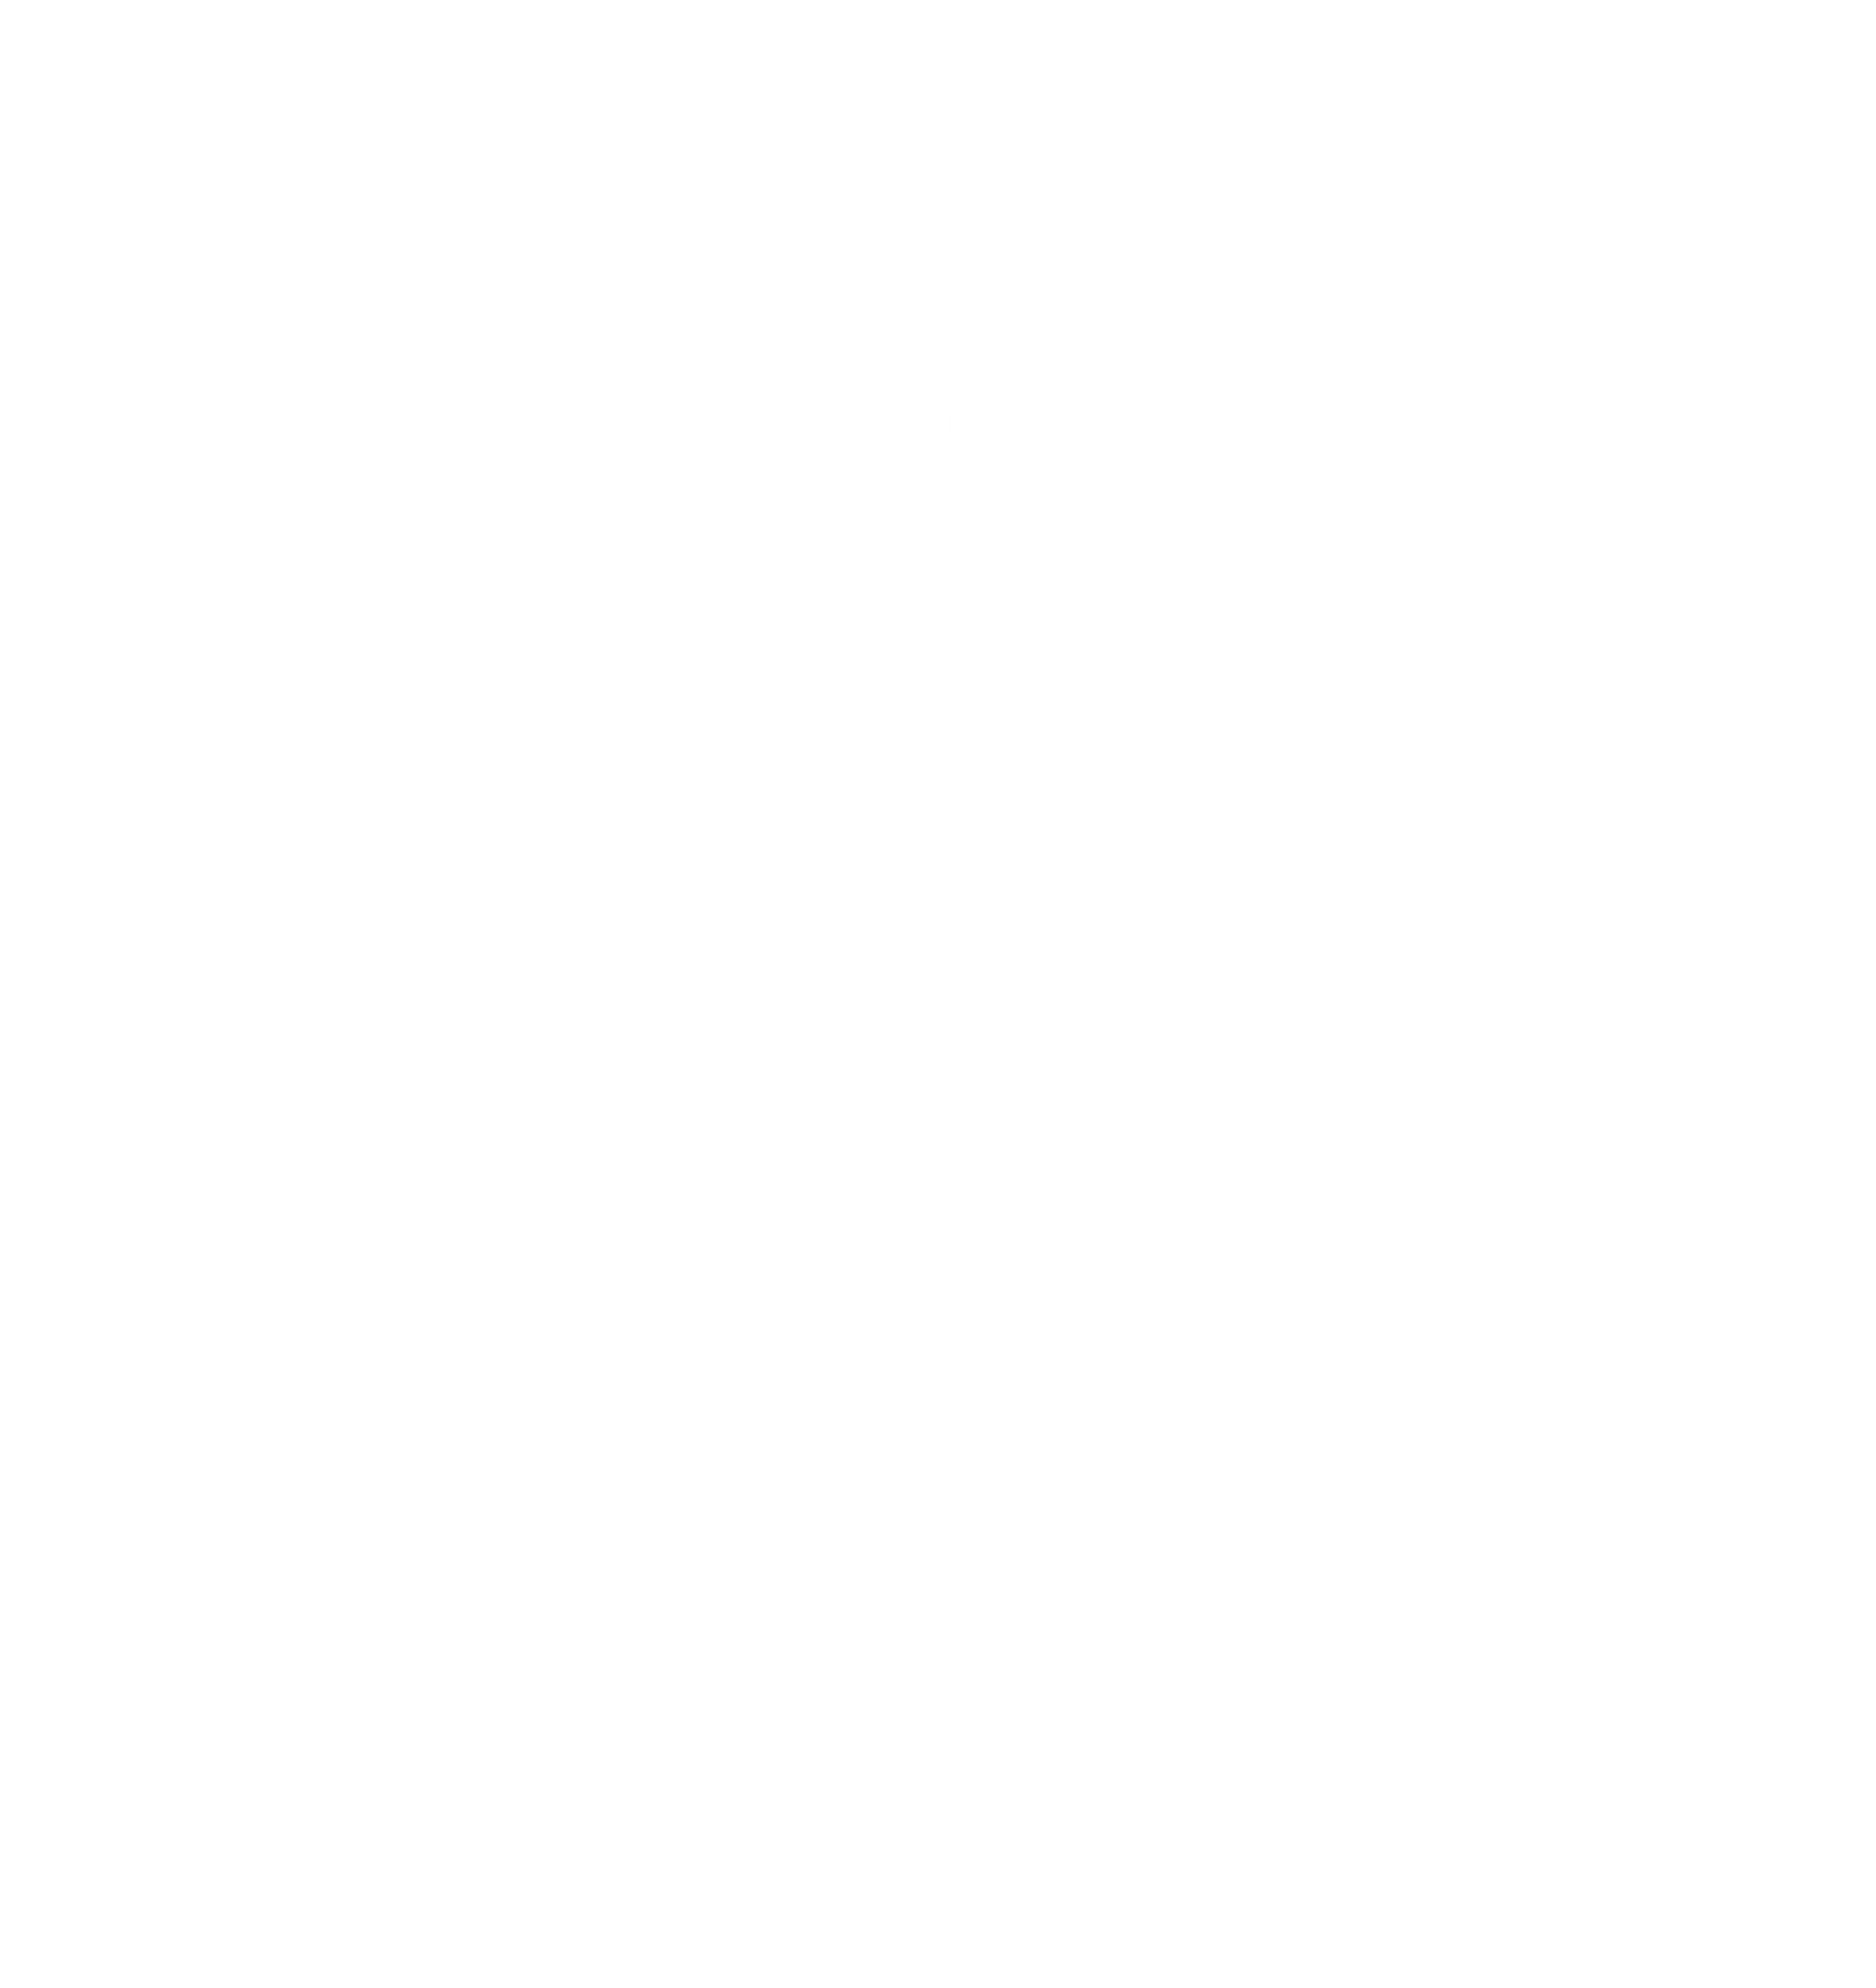 Jesus Saves, Graphic Shirt